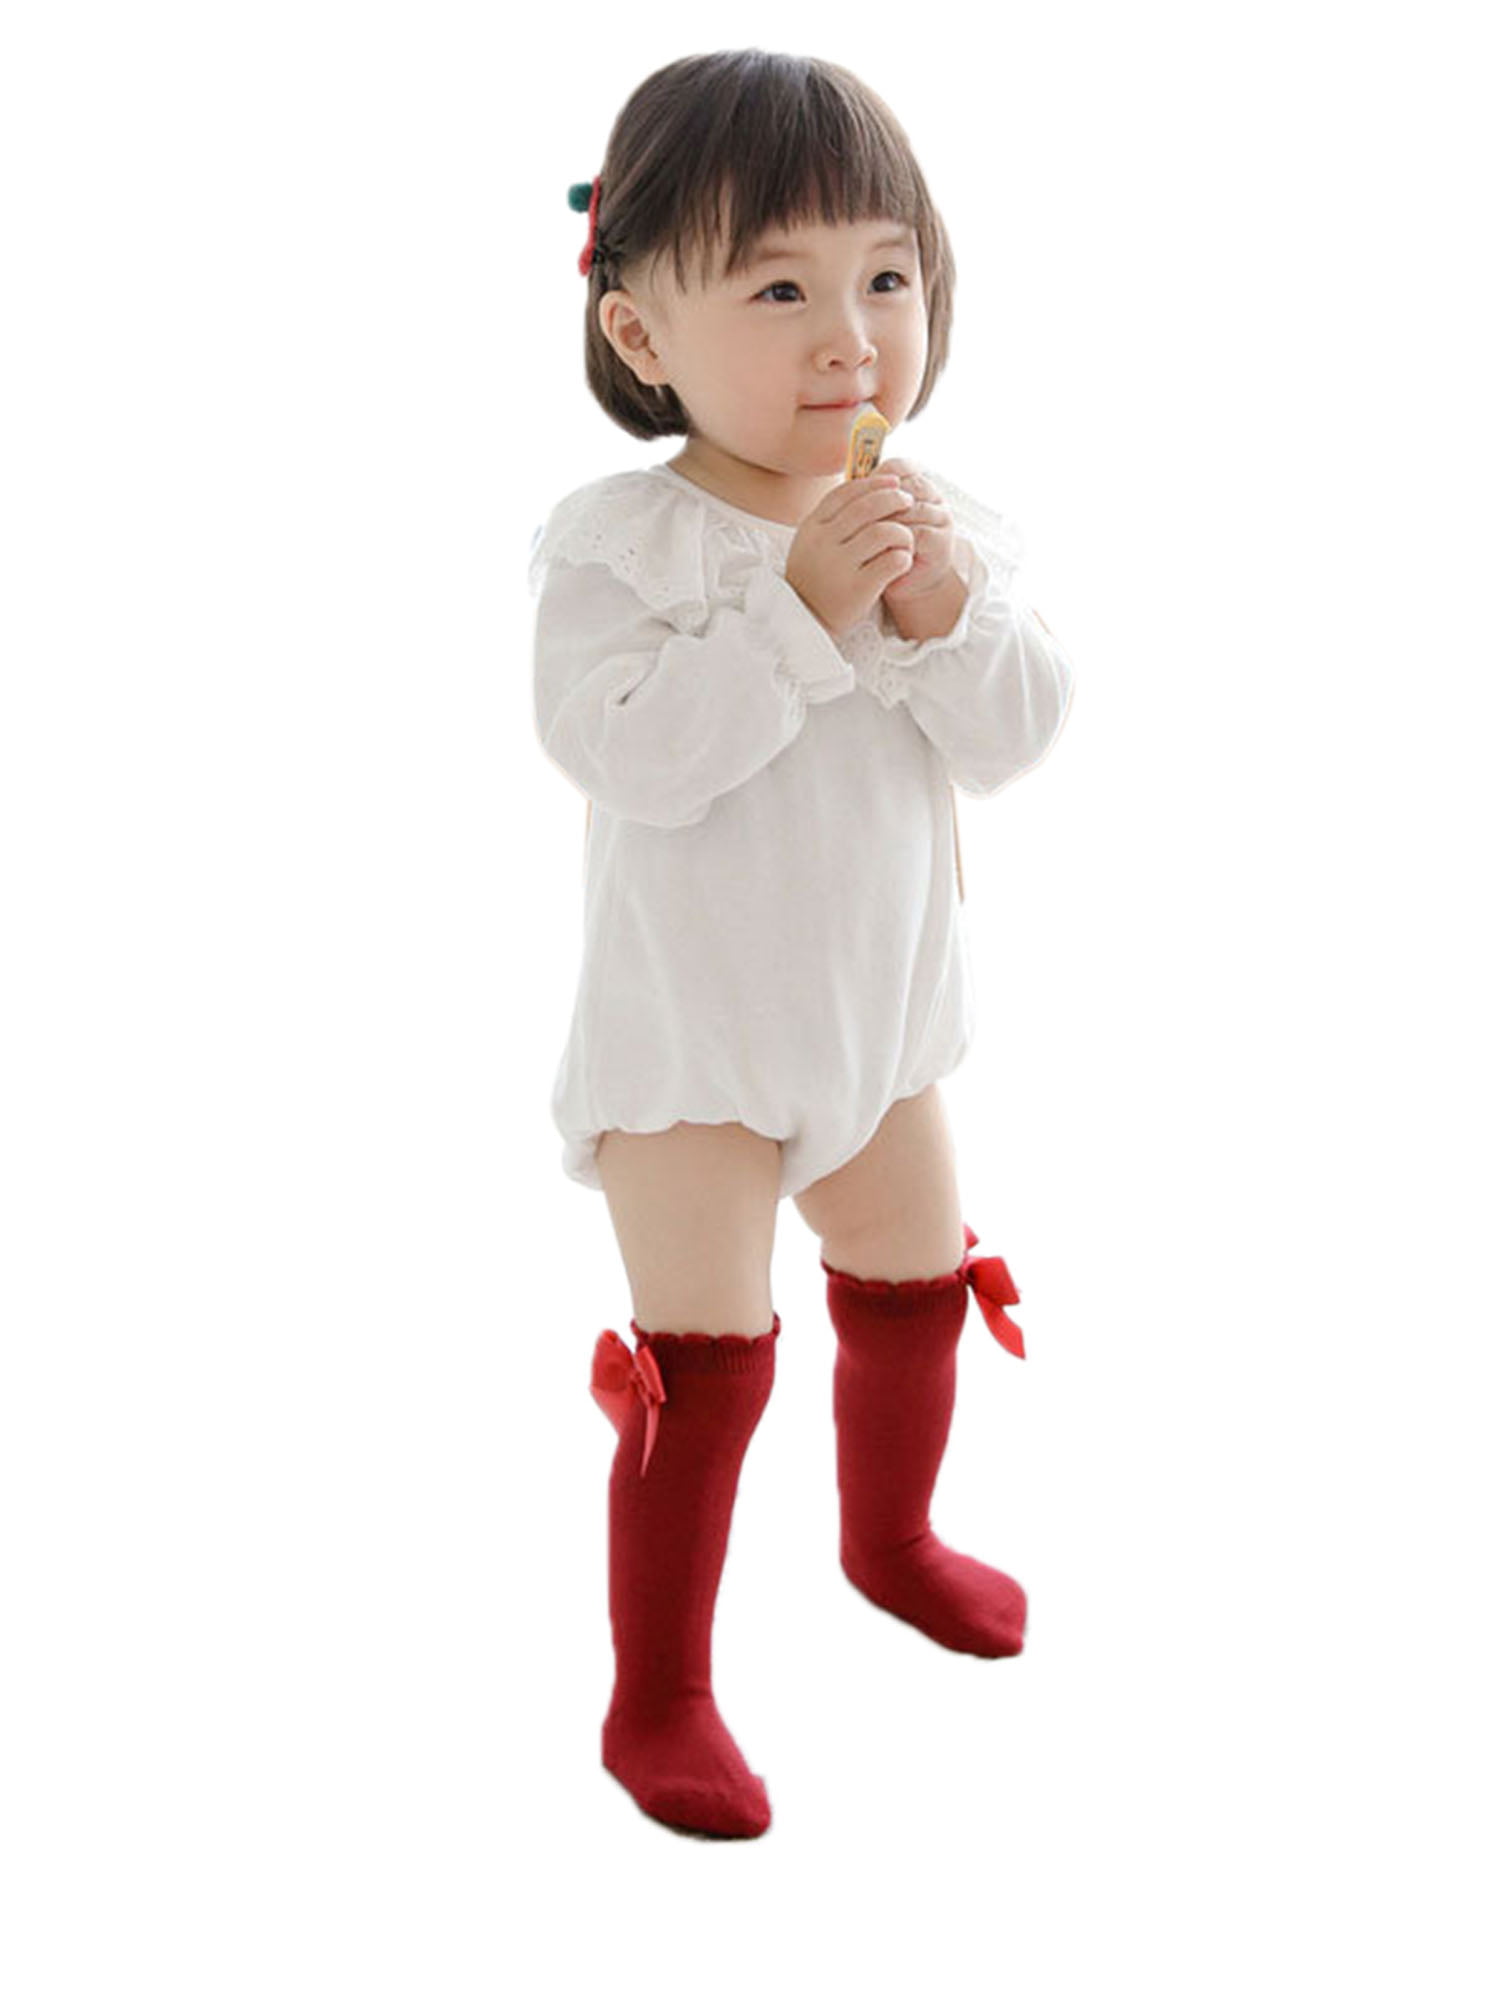 Louis Vuitton 3 Socks Set Red White Cotton. Size 6 Months